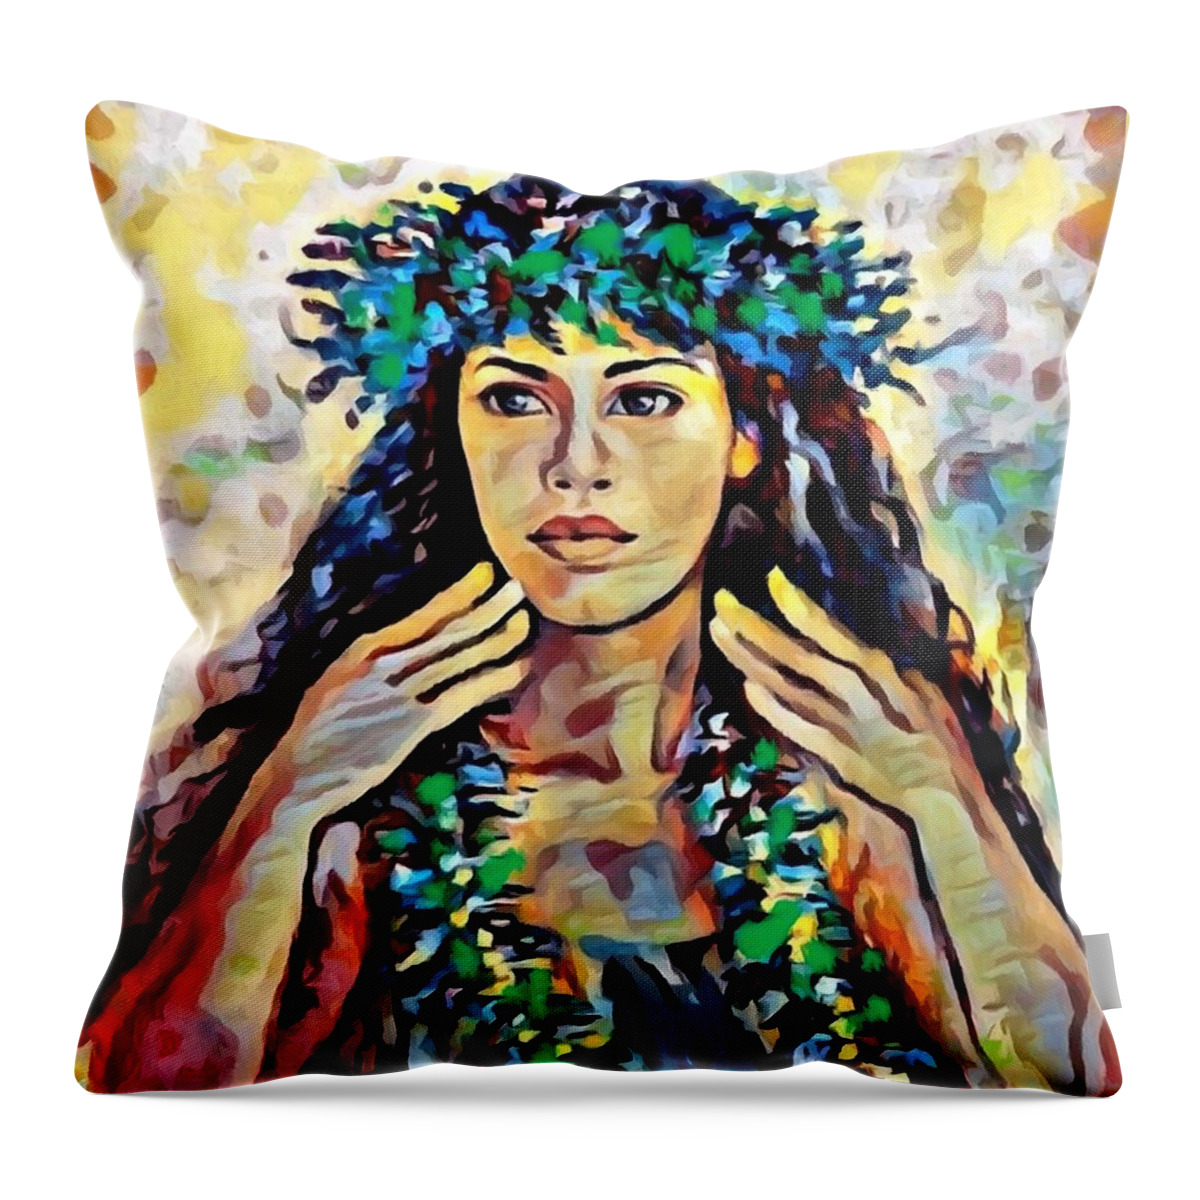 Hawaiian Dancer Throw Pillow featuring the mixed media Hawaiian Dancer by Carl Gouveia